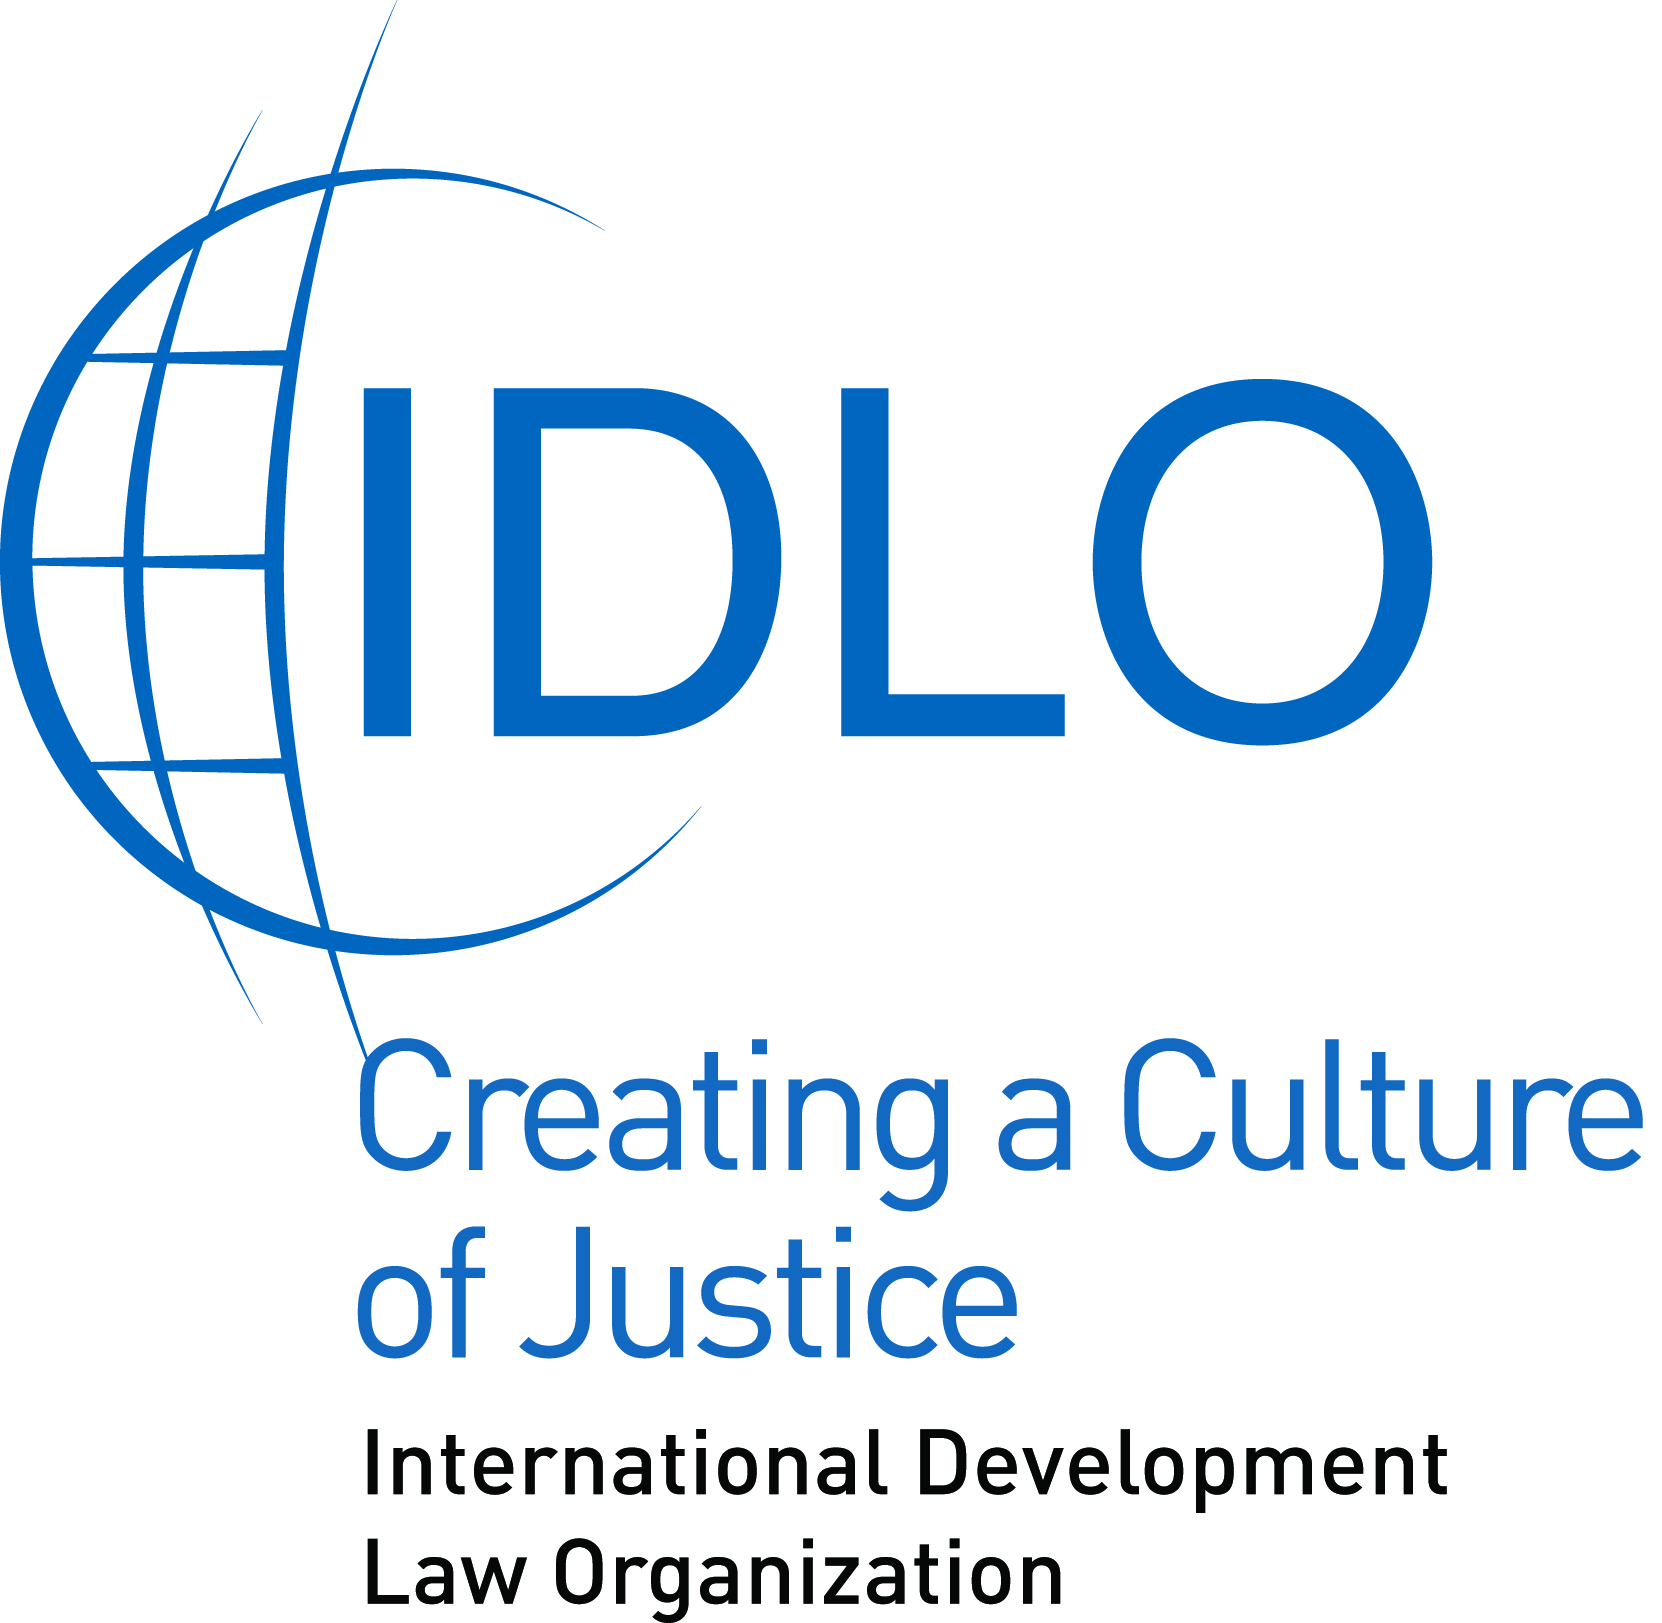 International Development Law Organization